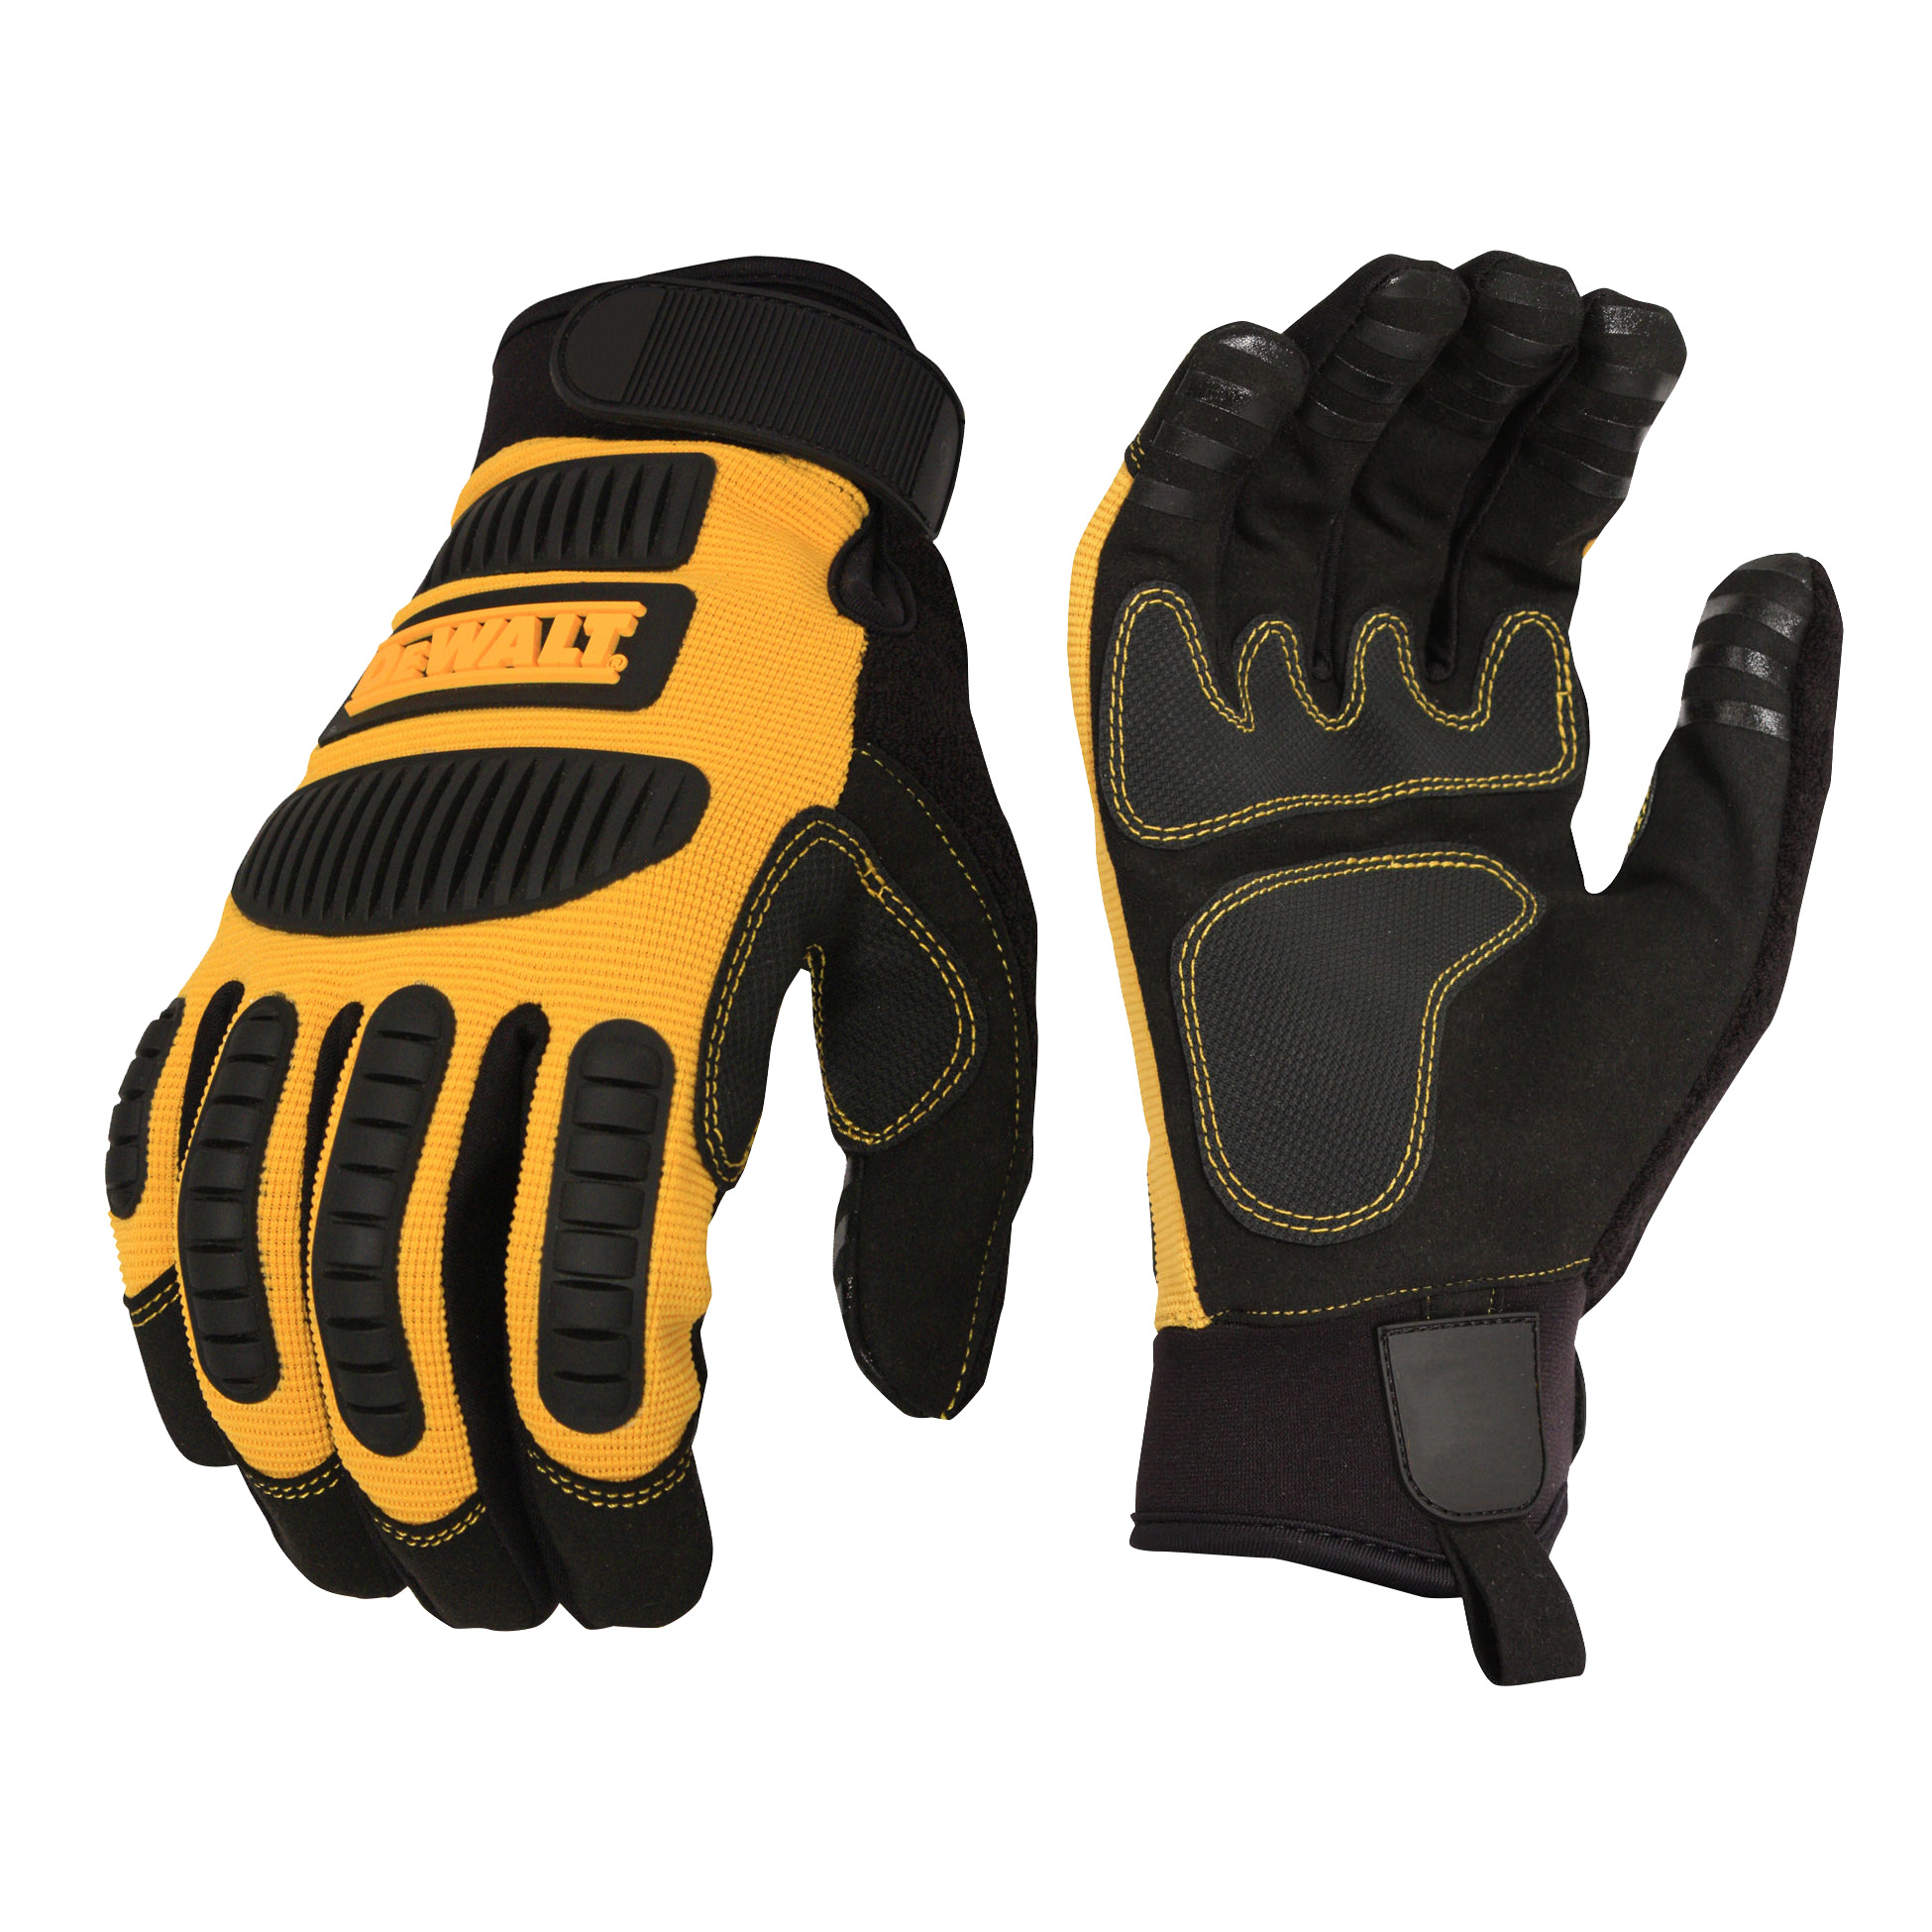 DPG780 Performance Mechanic Work Glove - Size M - Mechanic Work Gloves